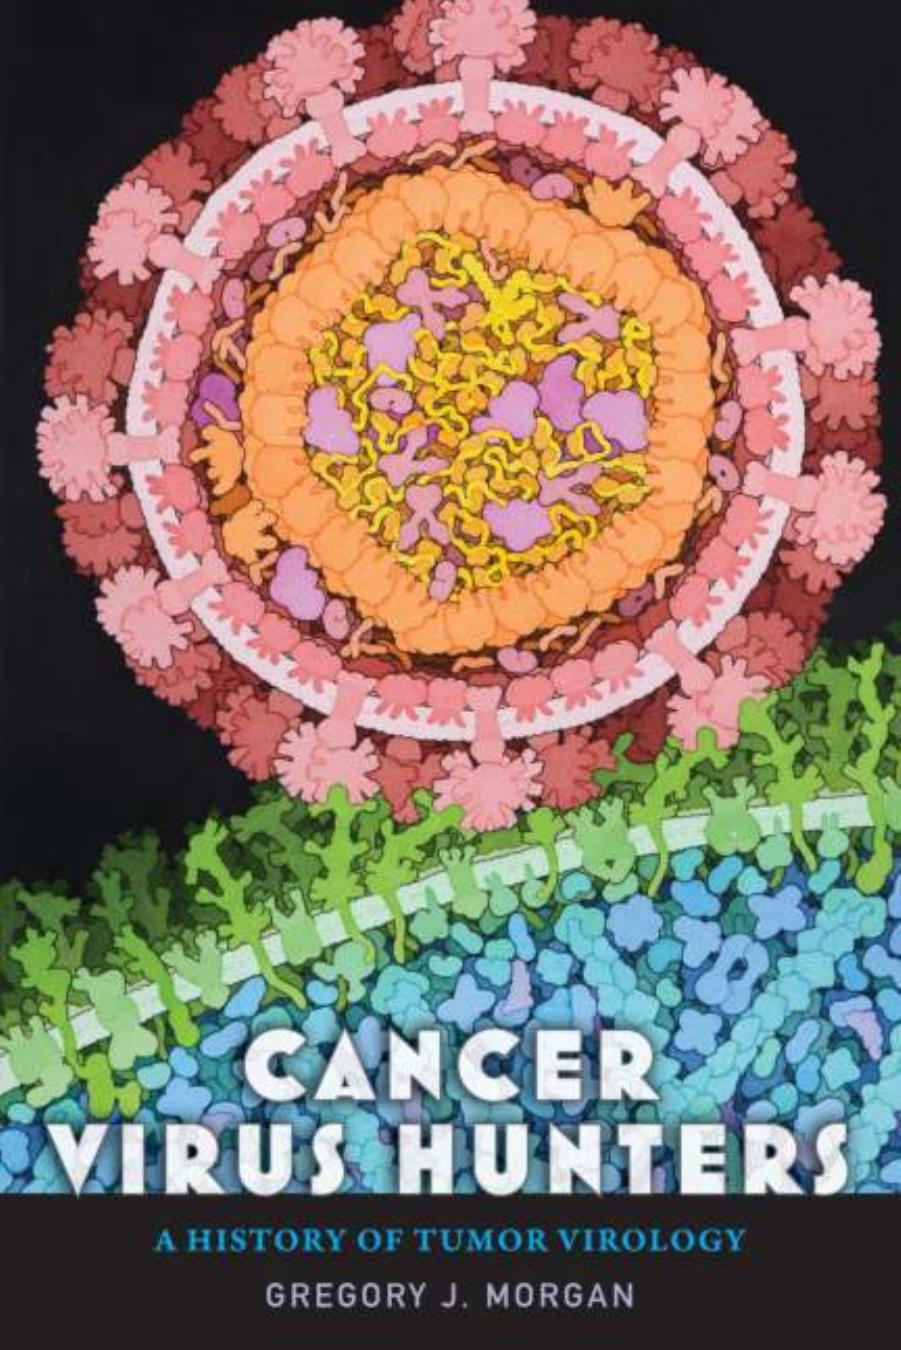 Cancer virus hunters   a history of tumor virology (2022)